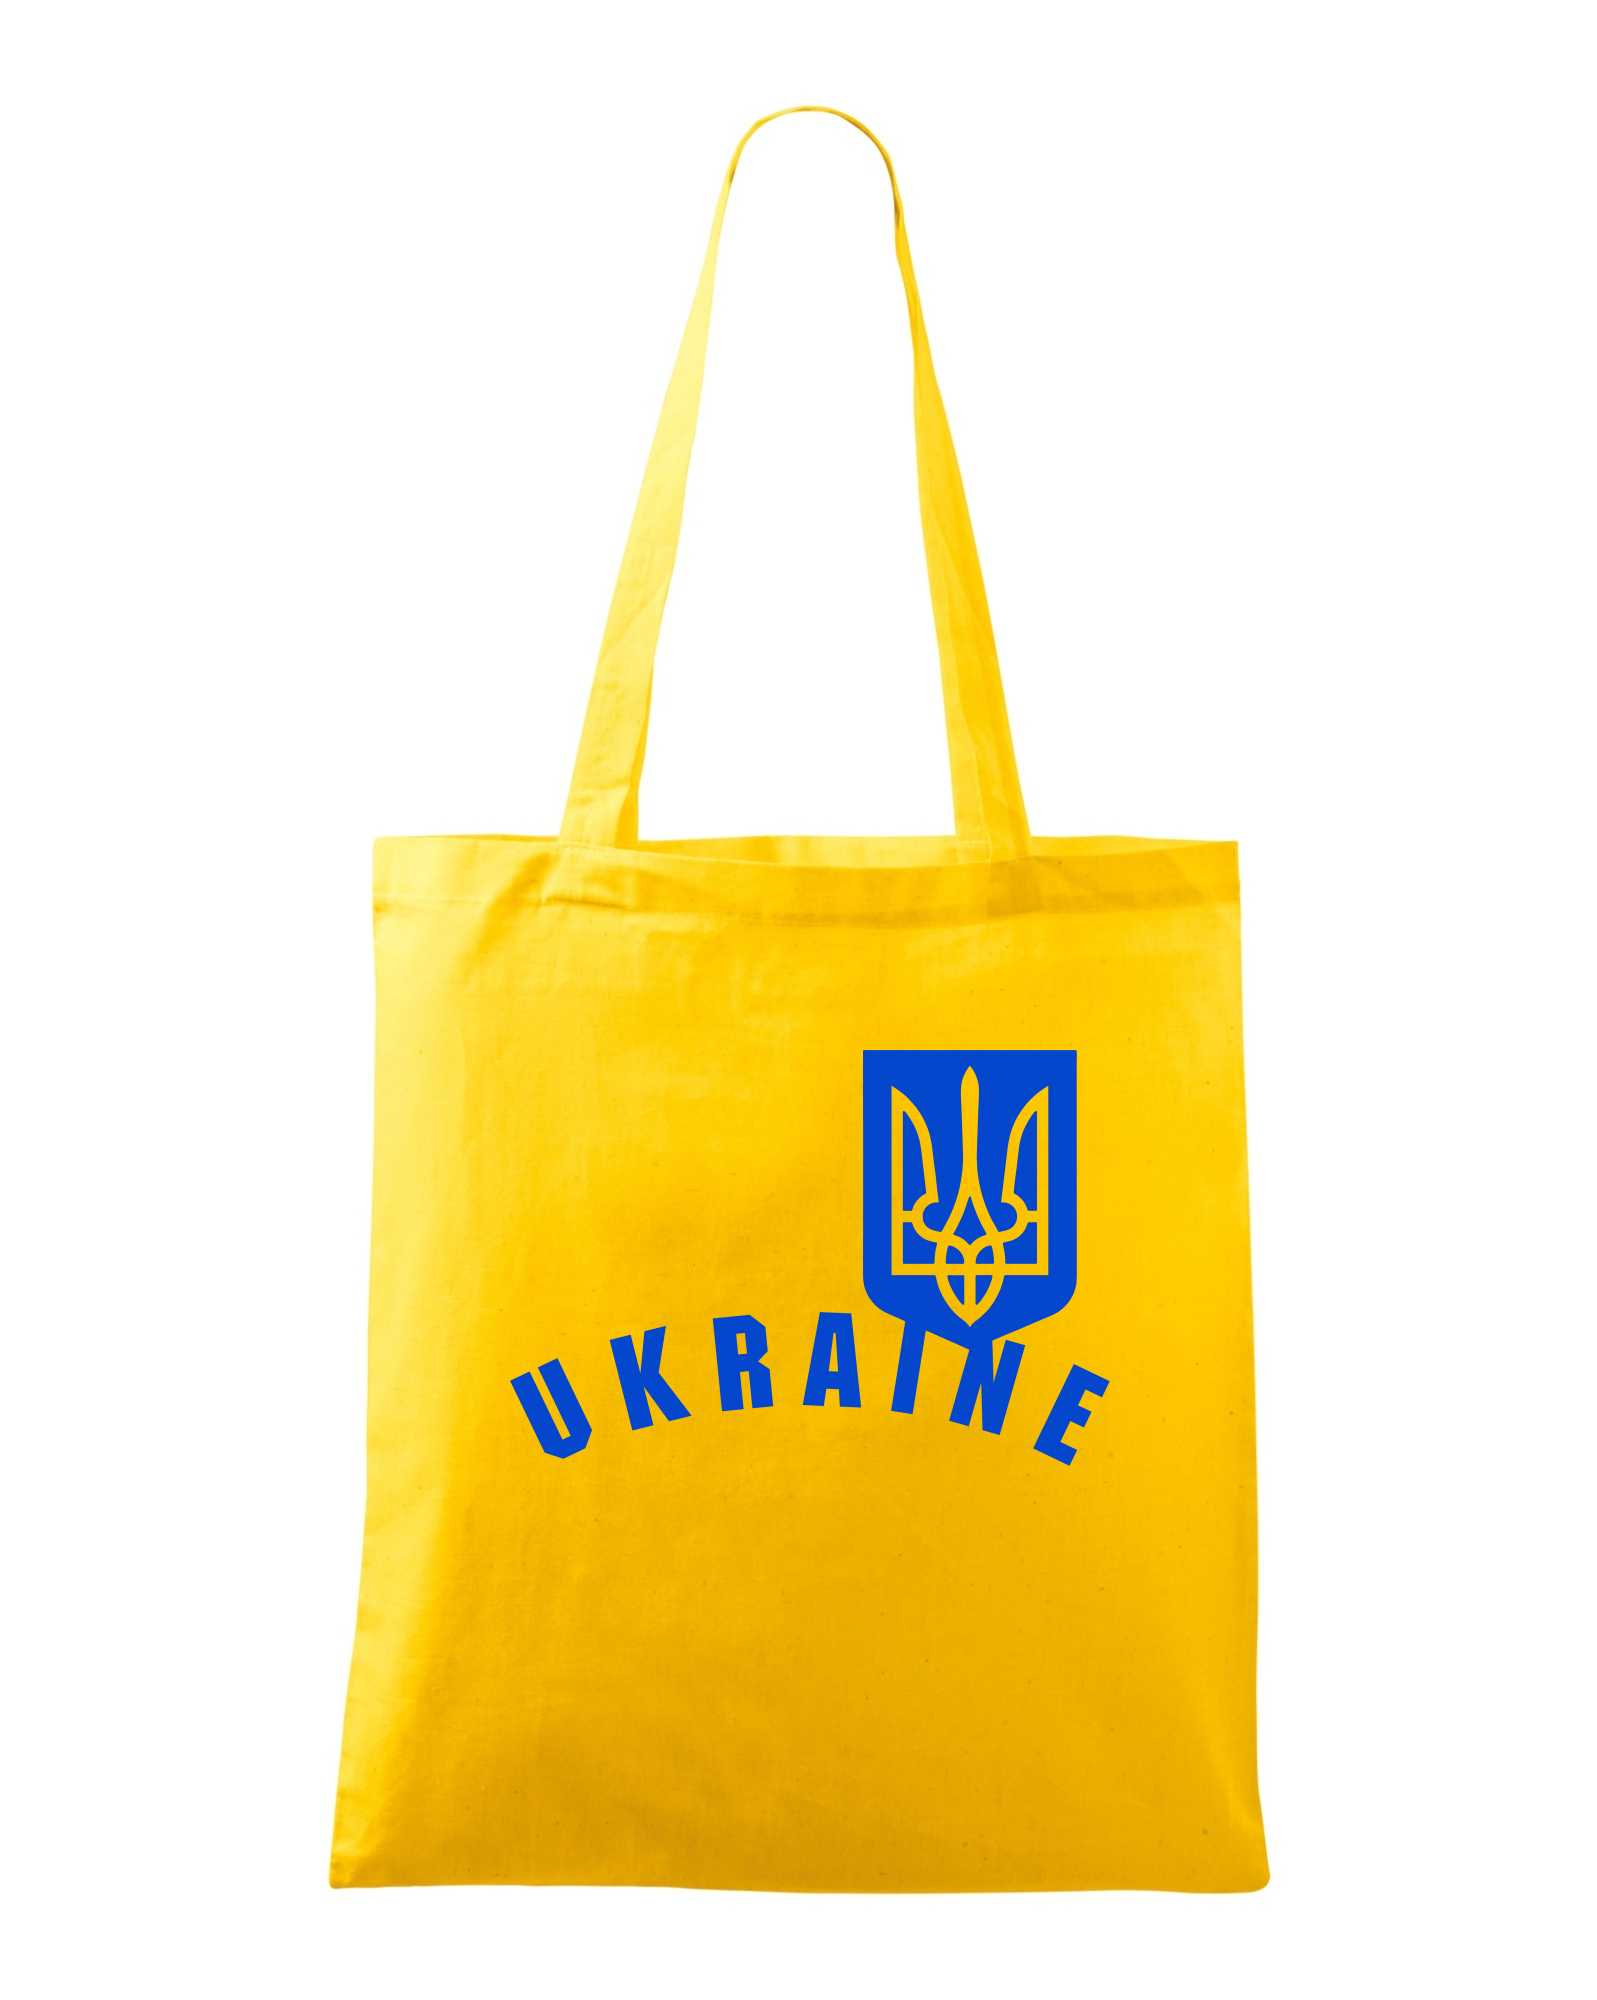 Ukrajina - Dres žlutý - Taška malá